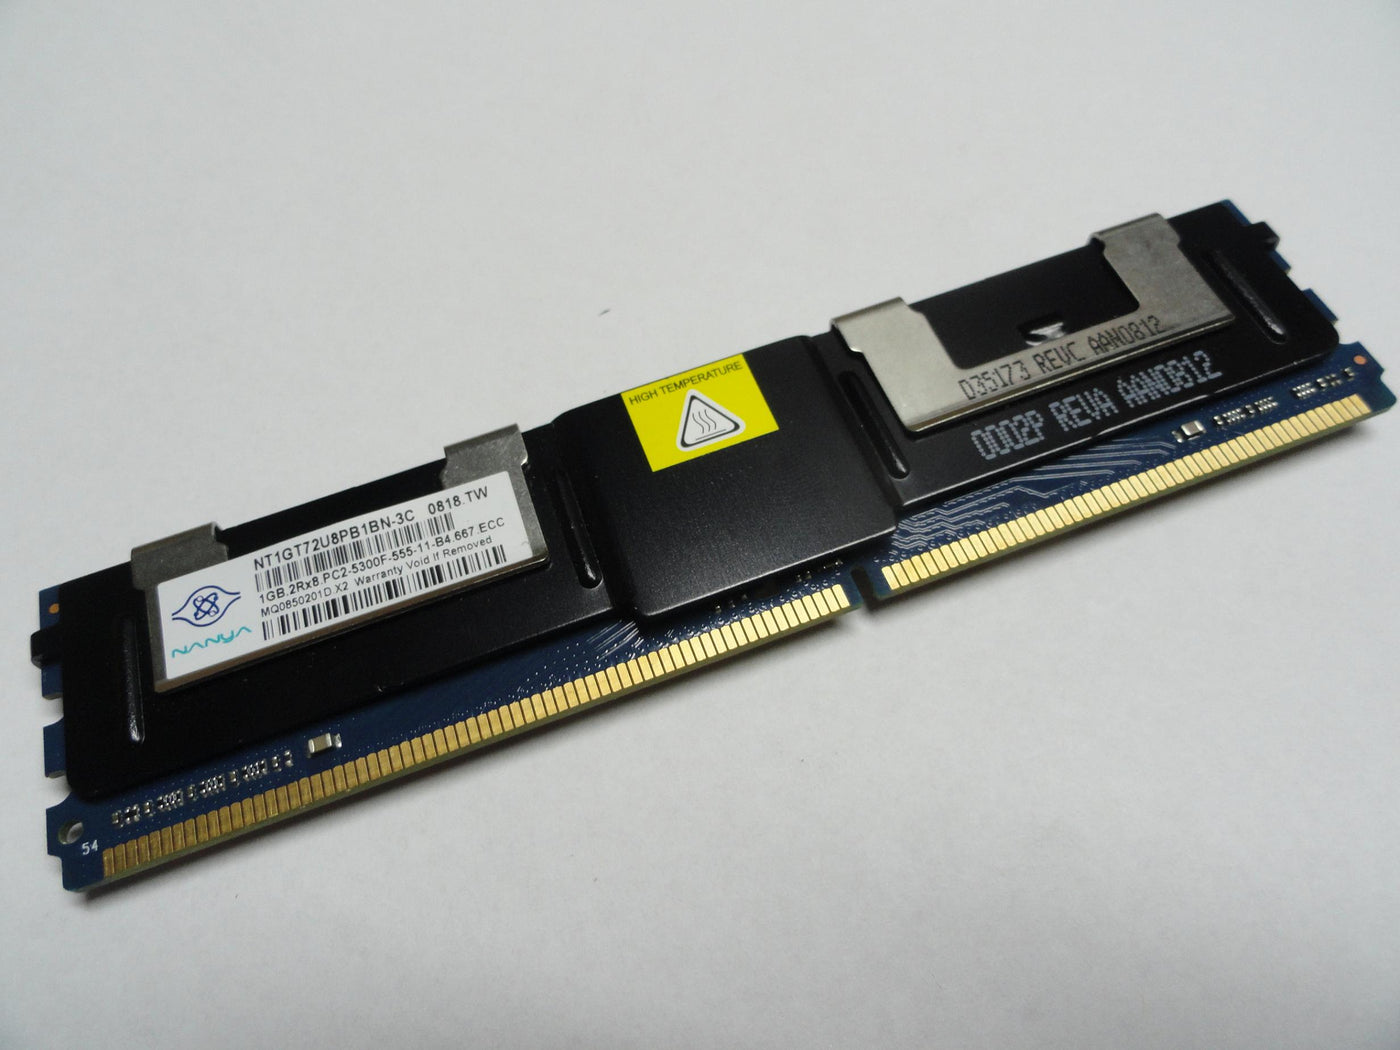 PC2-5300F-555-11-B4.667.ECC - Nanya 1GB 240pin PC2-5300 CL5 DDR2-667 ECC FBDIMM Mmeory Module - Refurbished